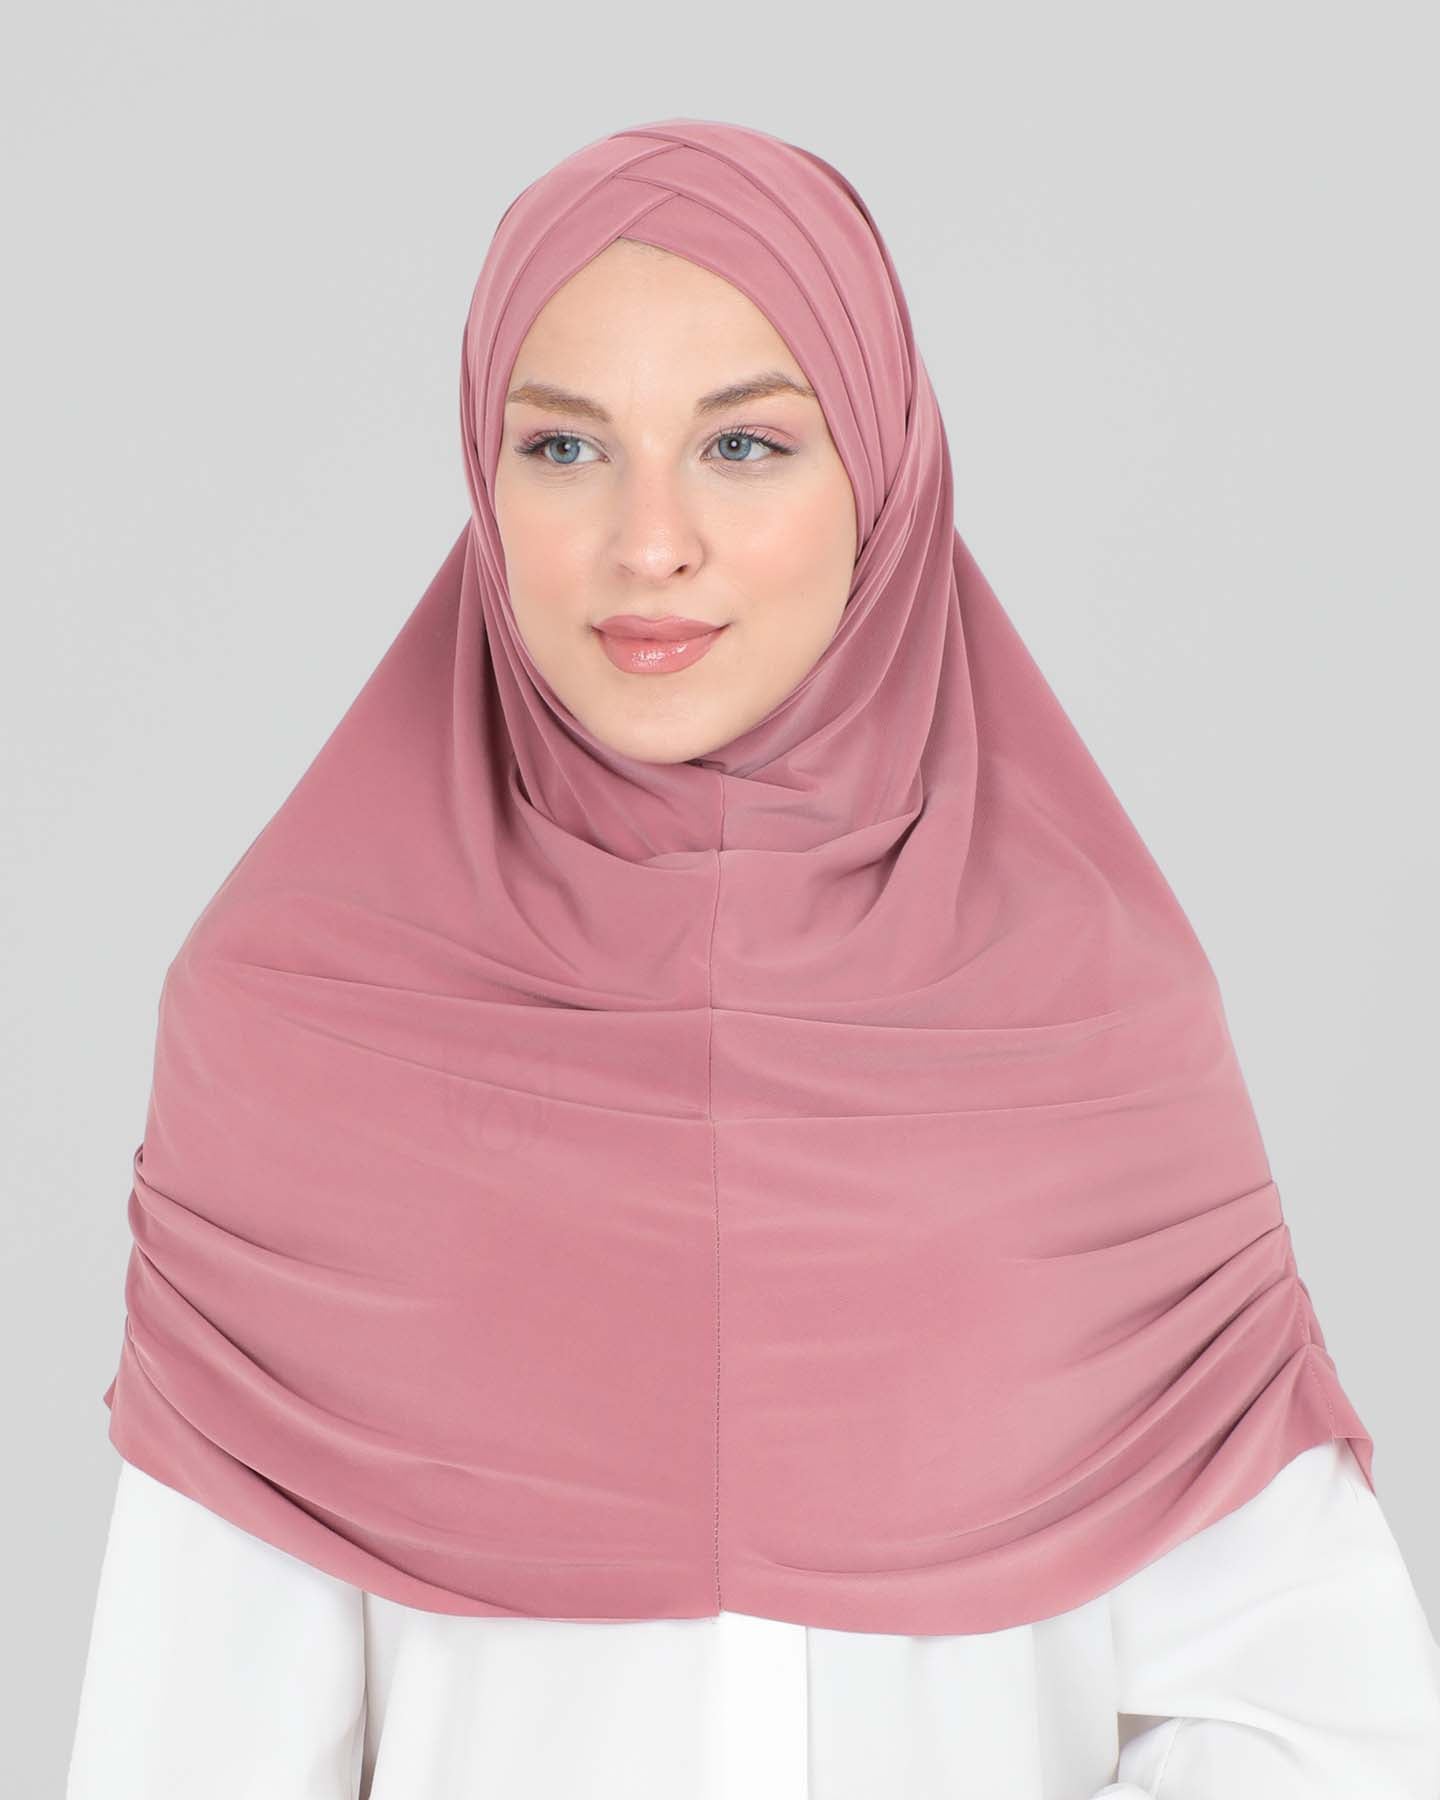 Hijab - Al Amira cross with cap - Pink